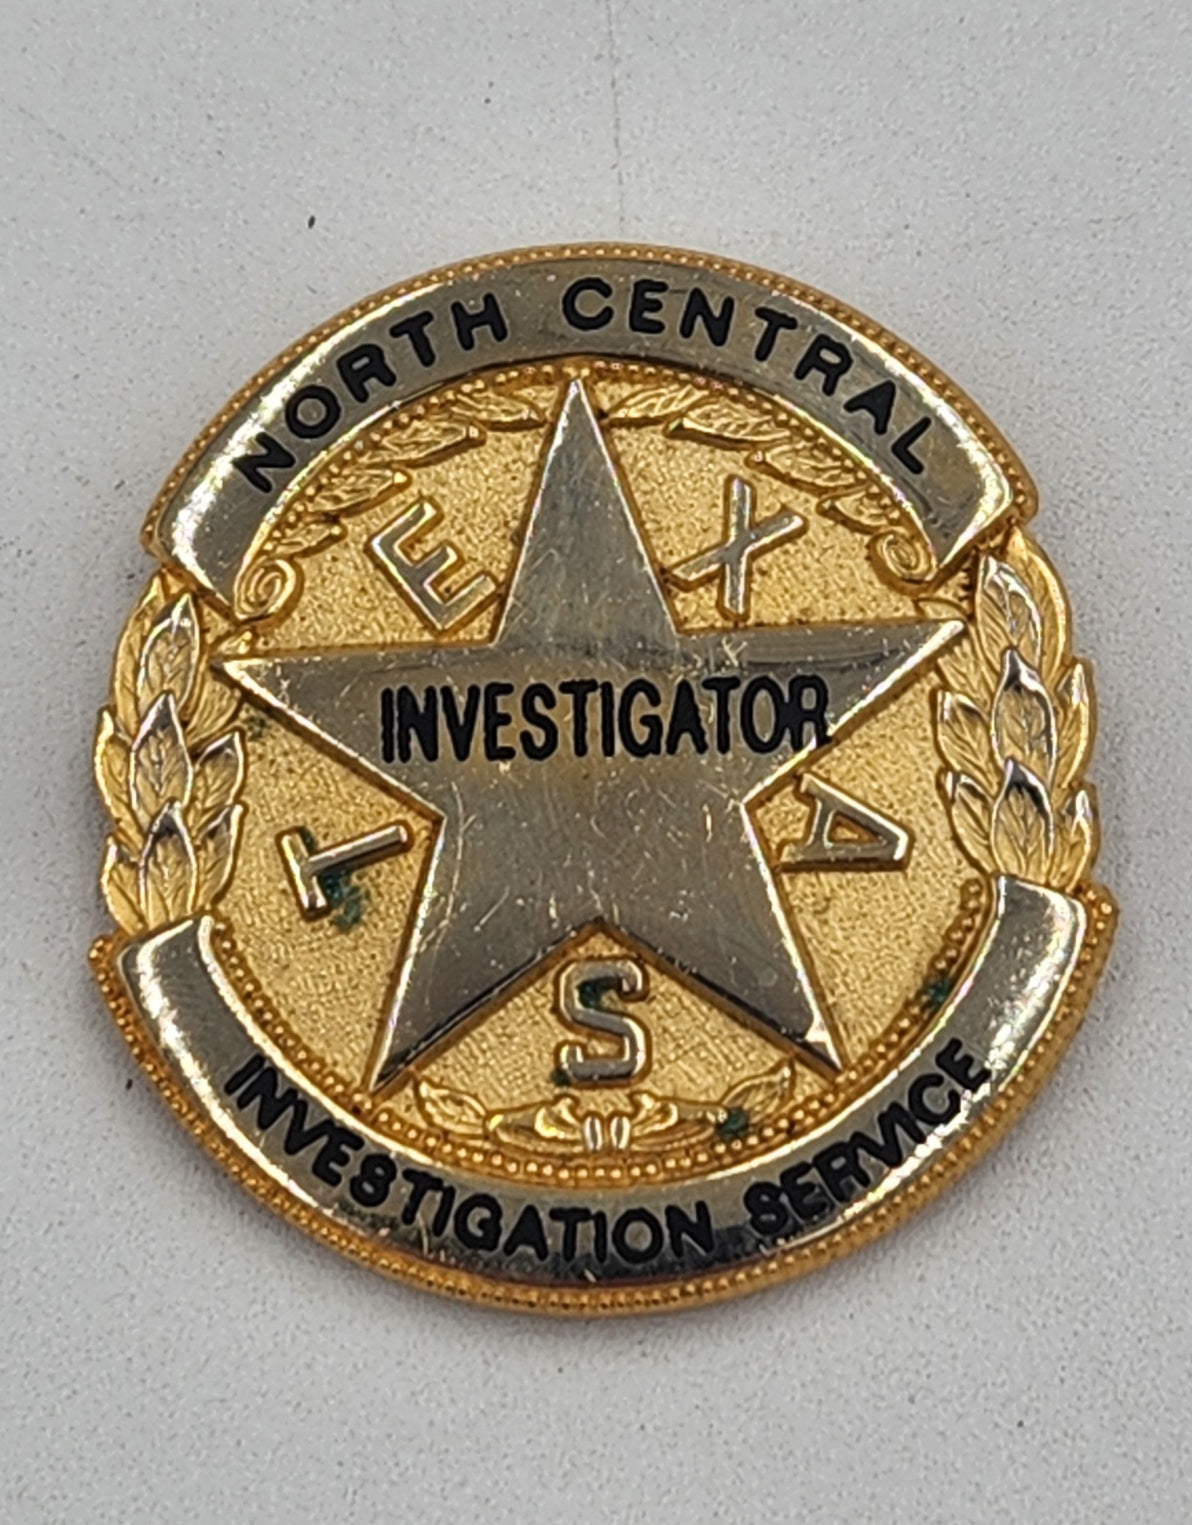 Investigator Badge North Central Texas Badge